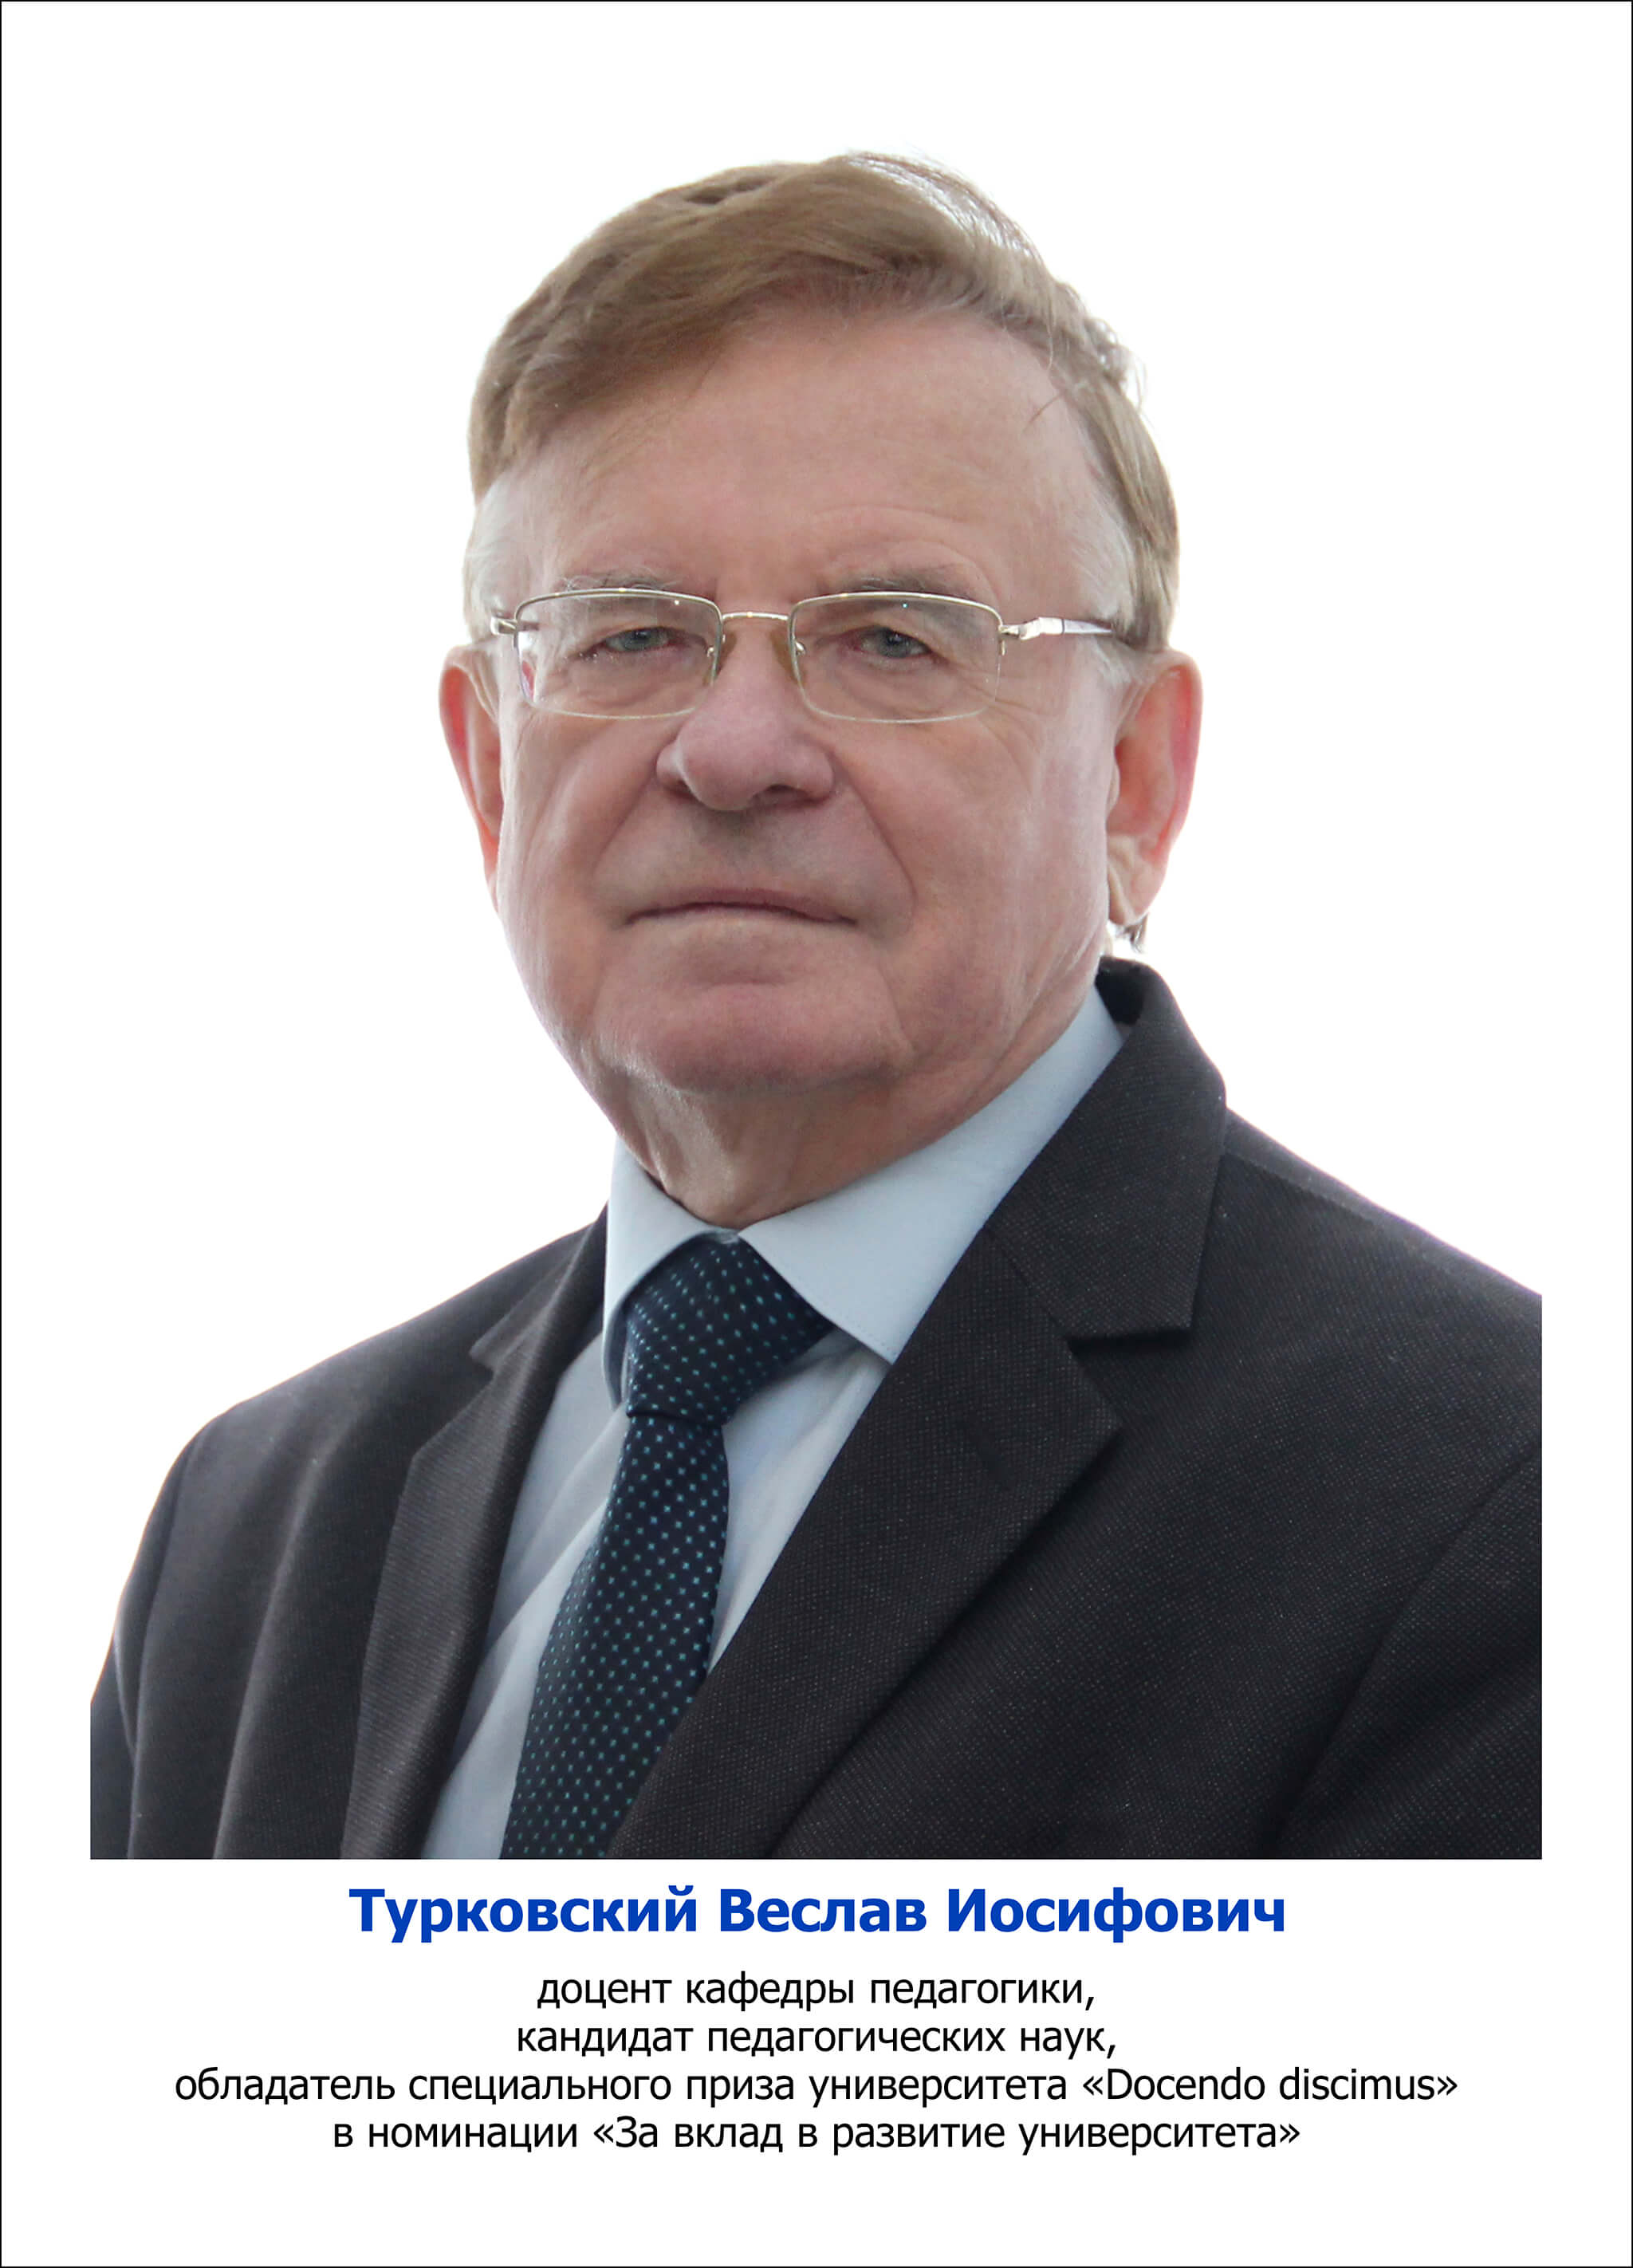 Турковский Веслав Иосифович